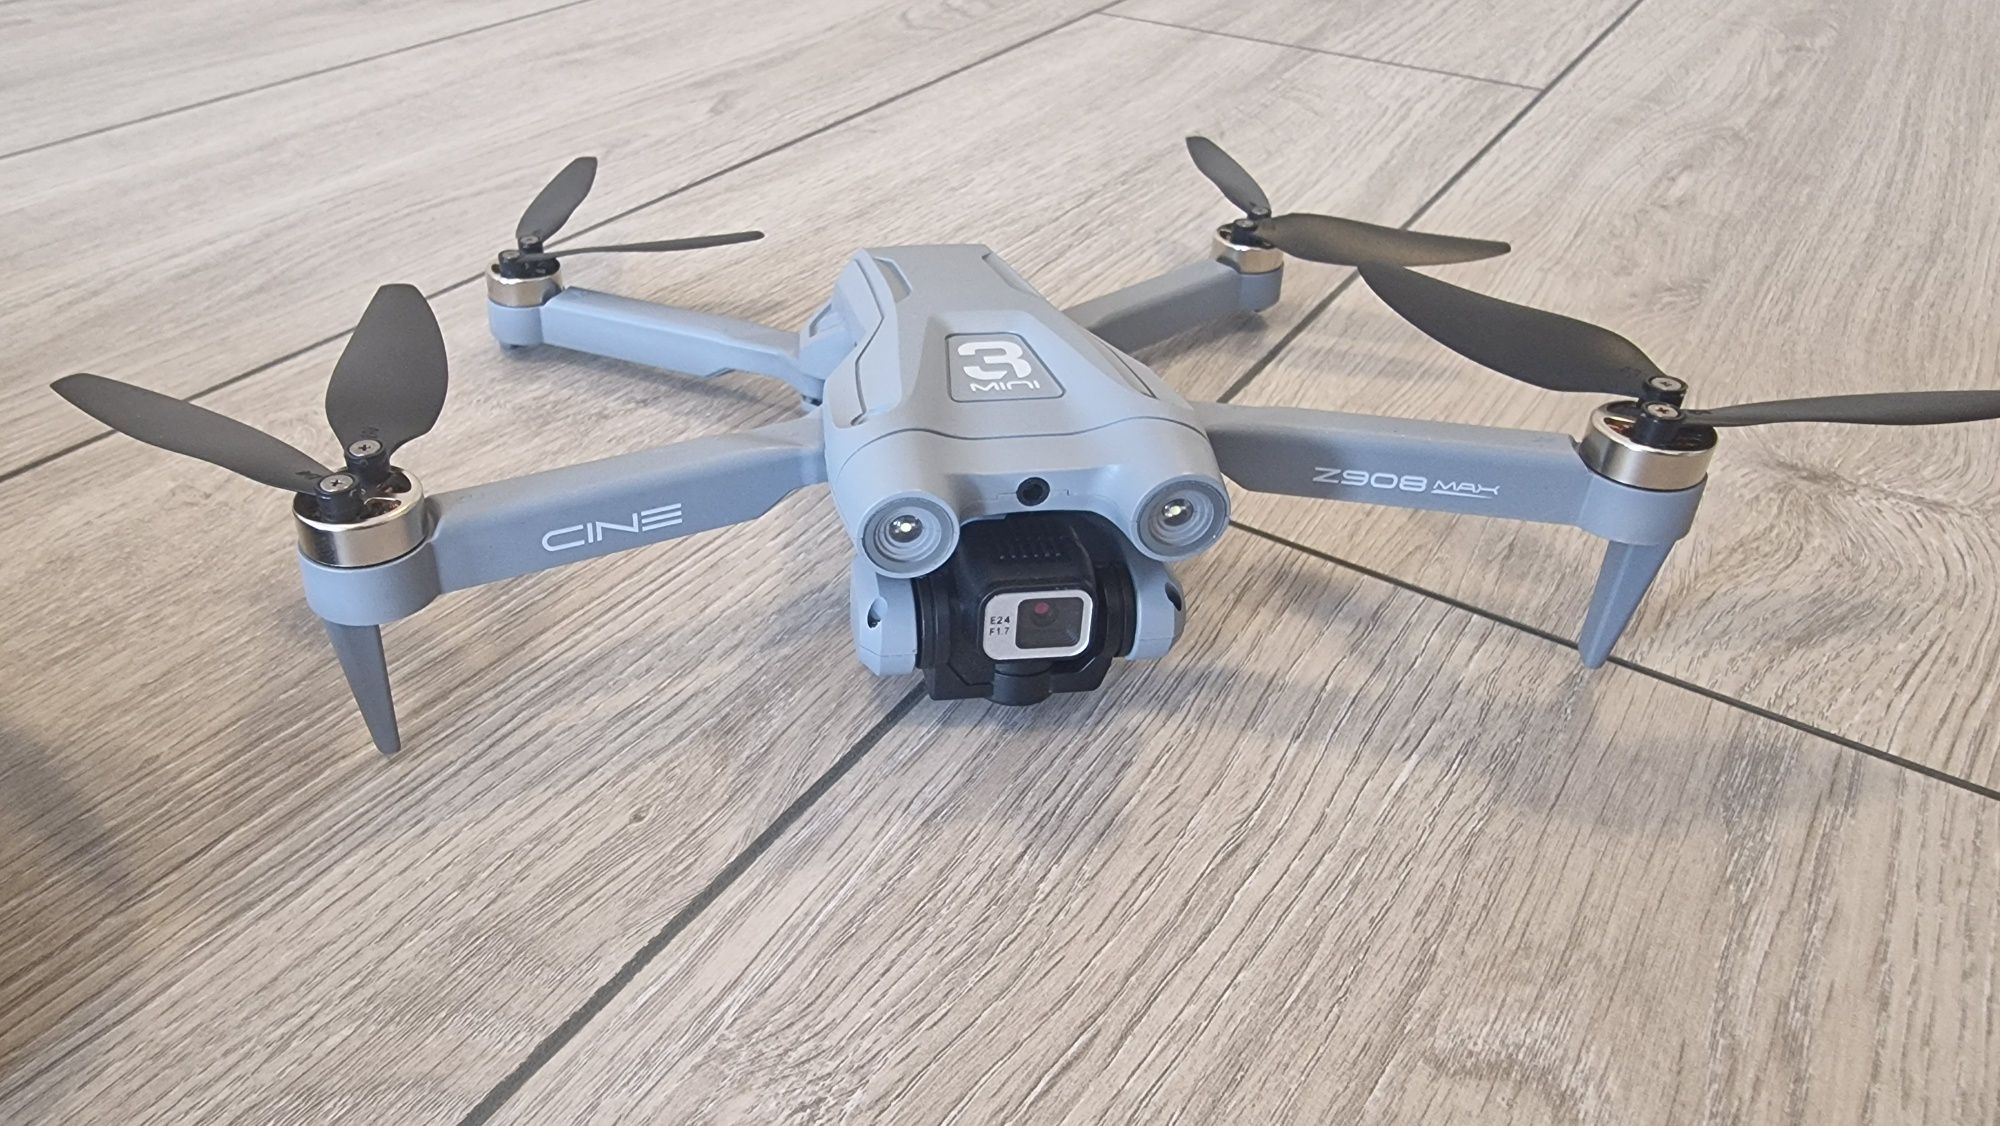 Drona 3 mini Cine Z908 MAX